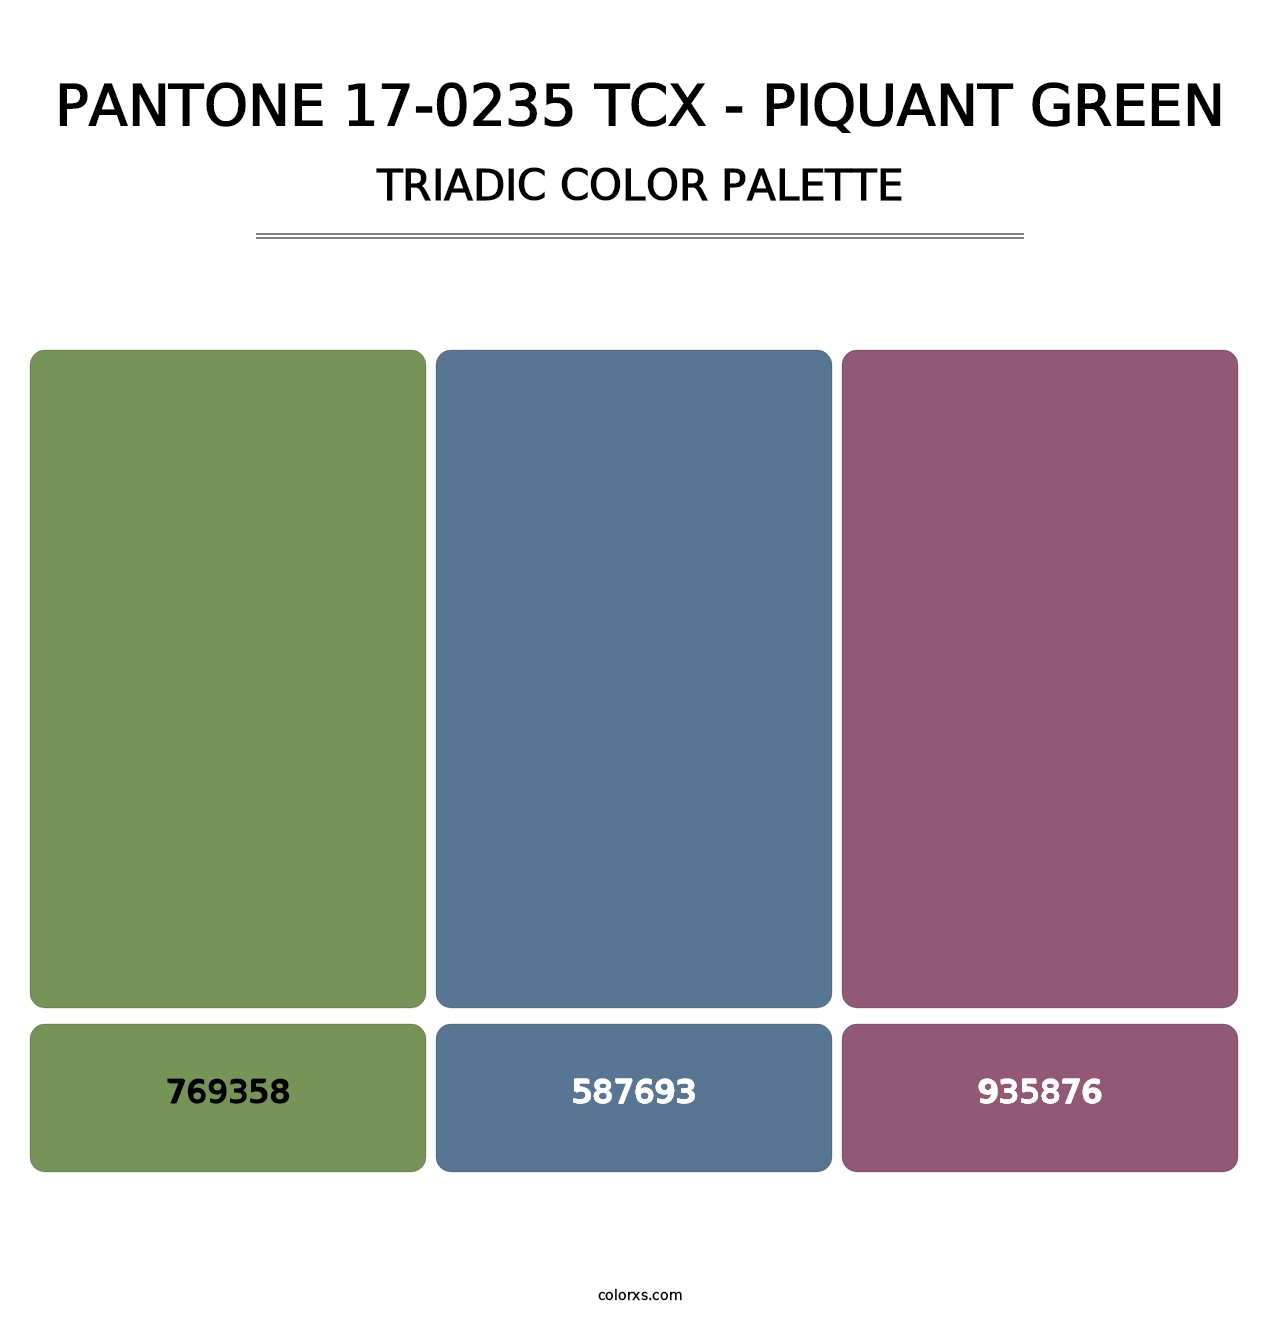 PANTONE 17-0235 TCX - Piquant Green - Triadic Color Palette